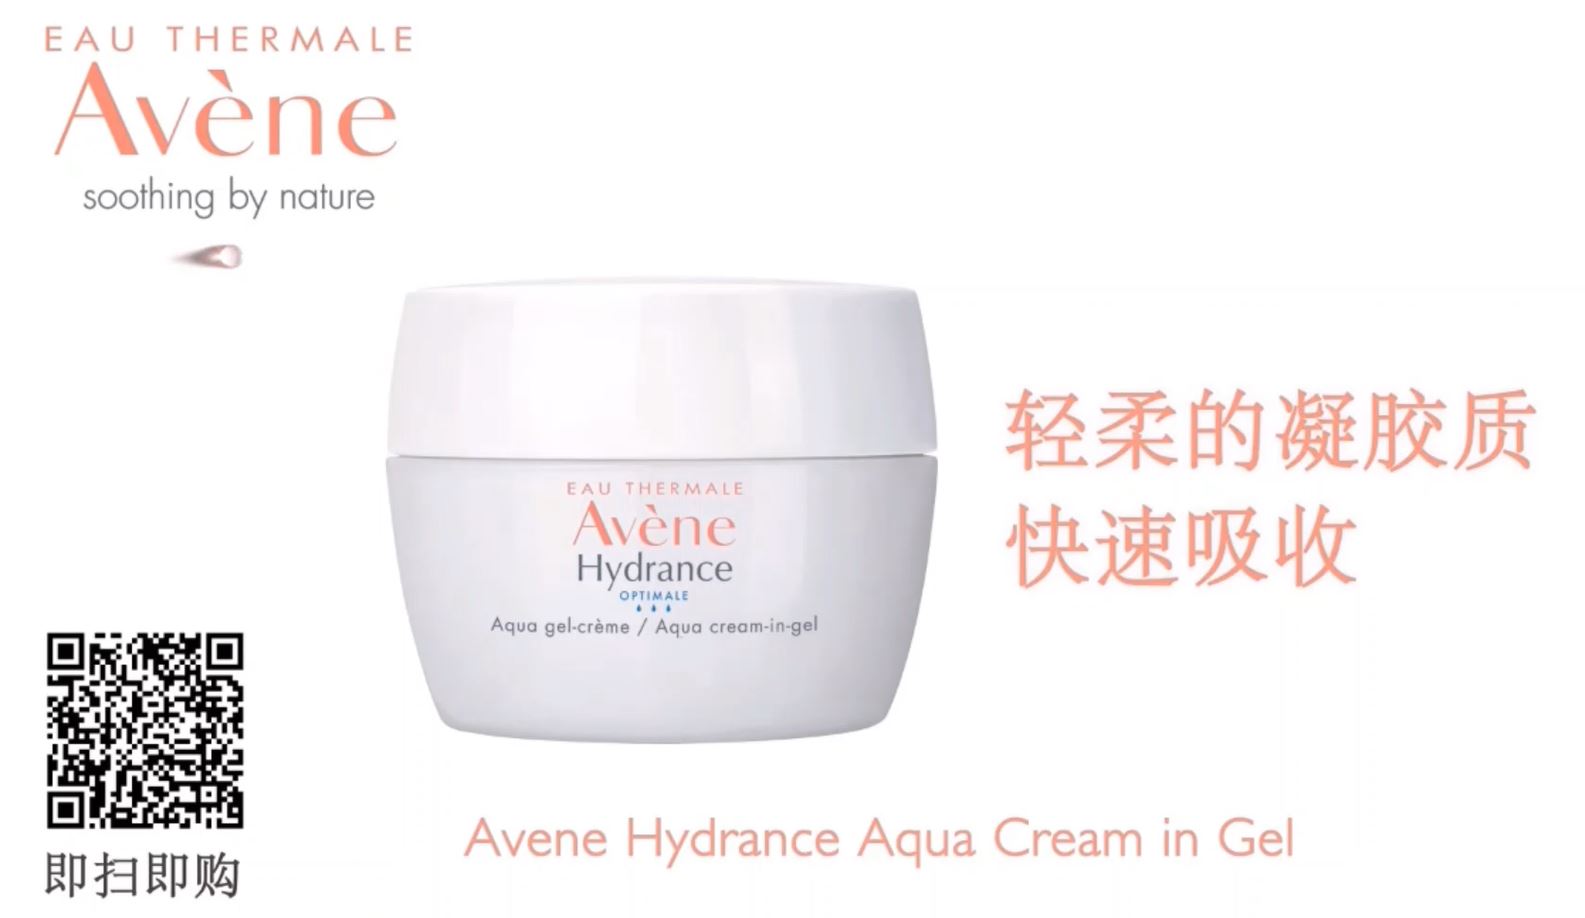 TV Voice Over – Avène Hydrance Aqua Cream in Gel